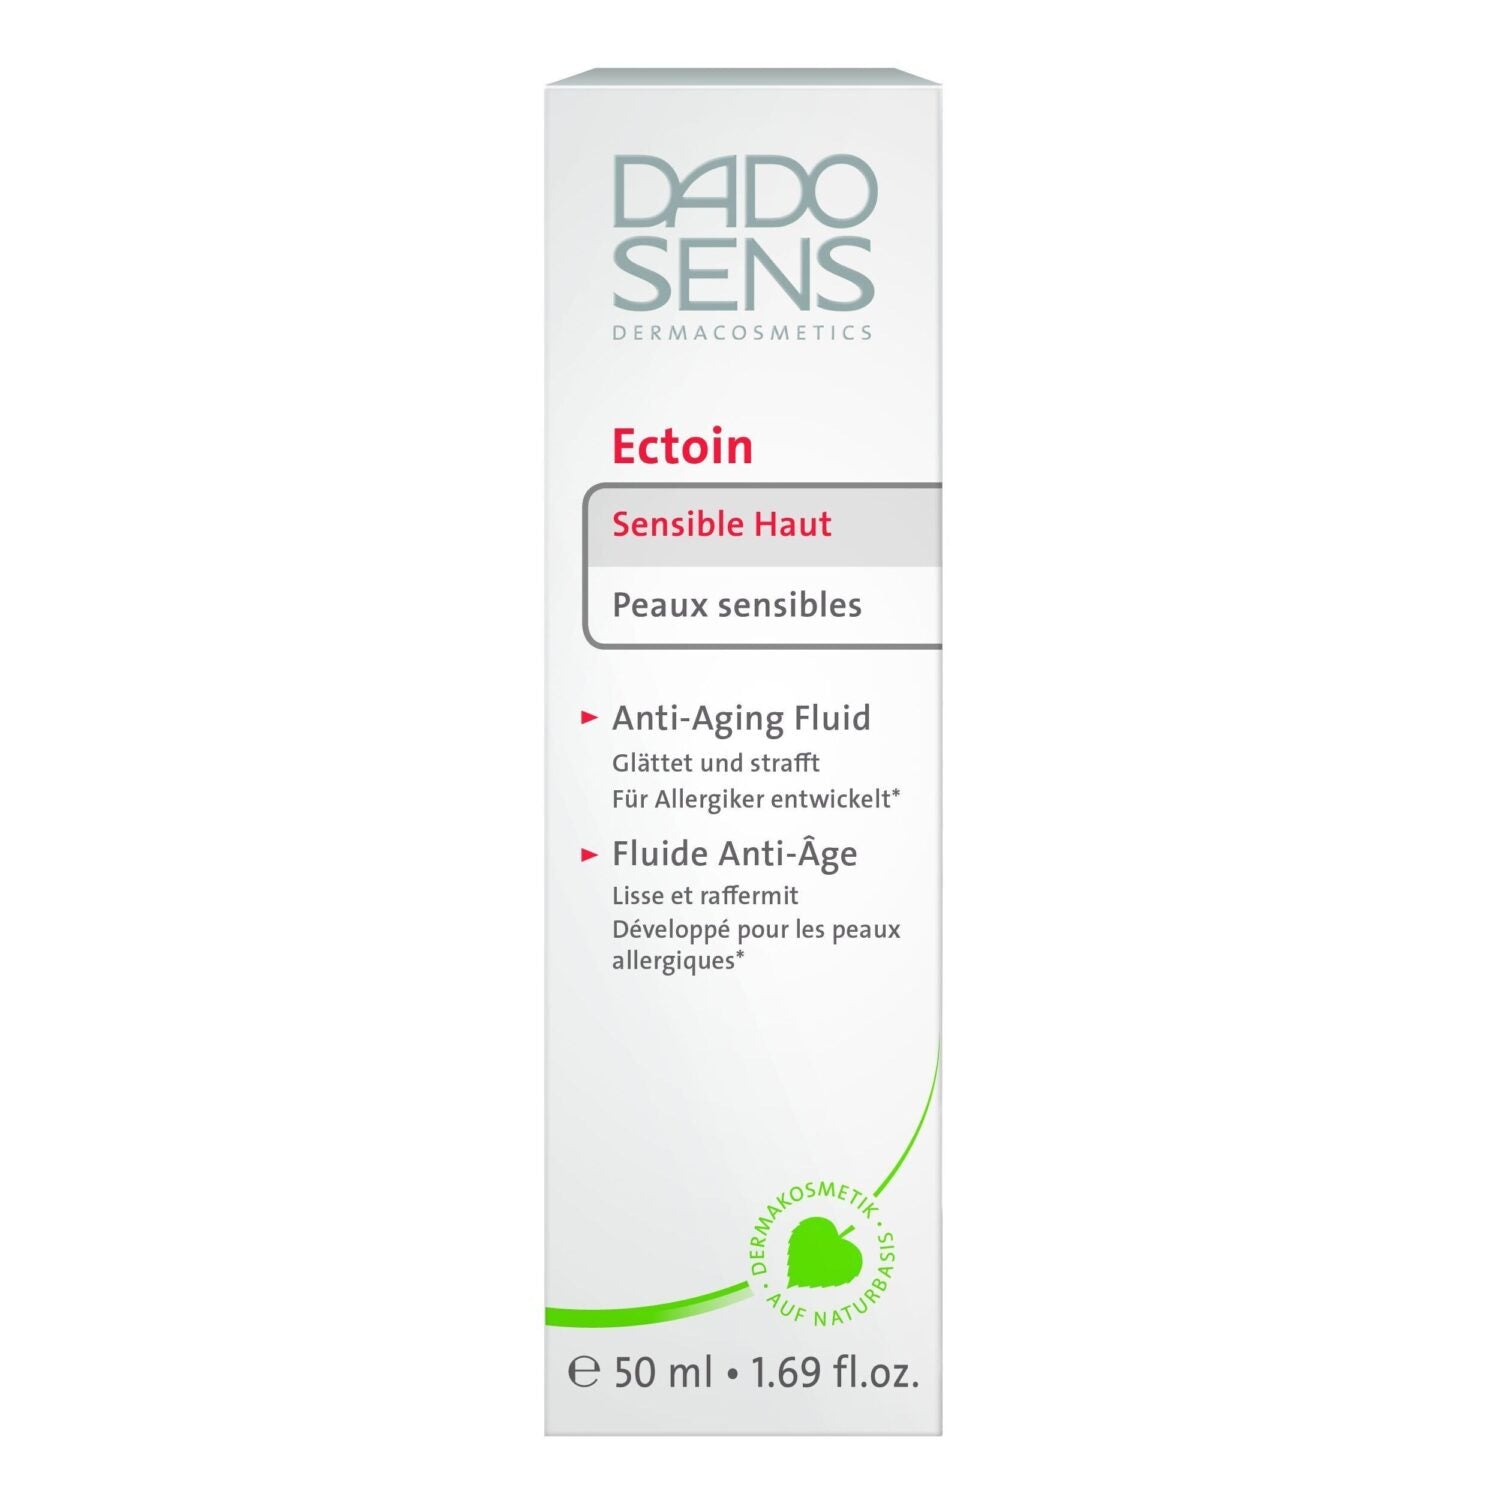 DADO SENS Ecotin Anti-Aging Fluid (2)